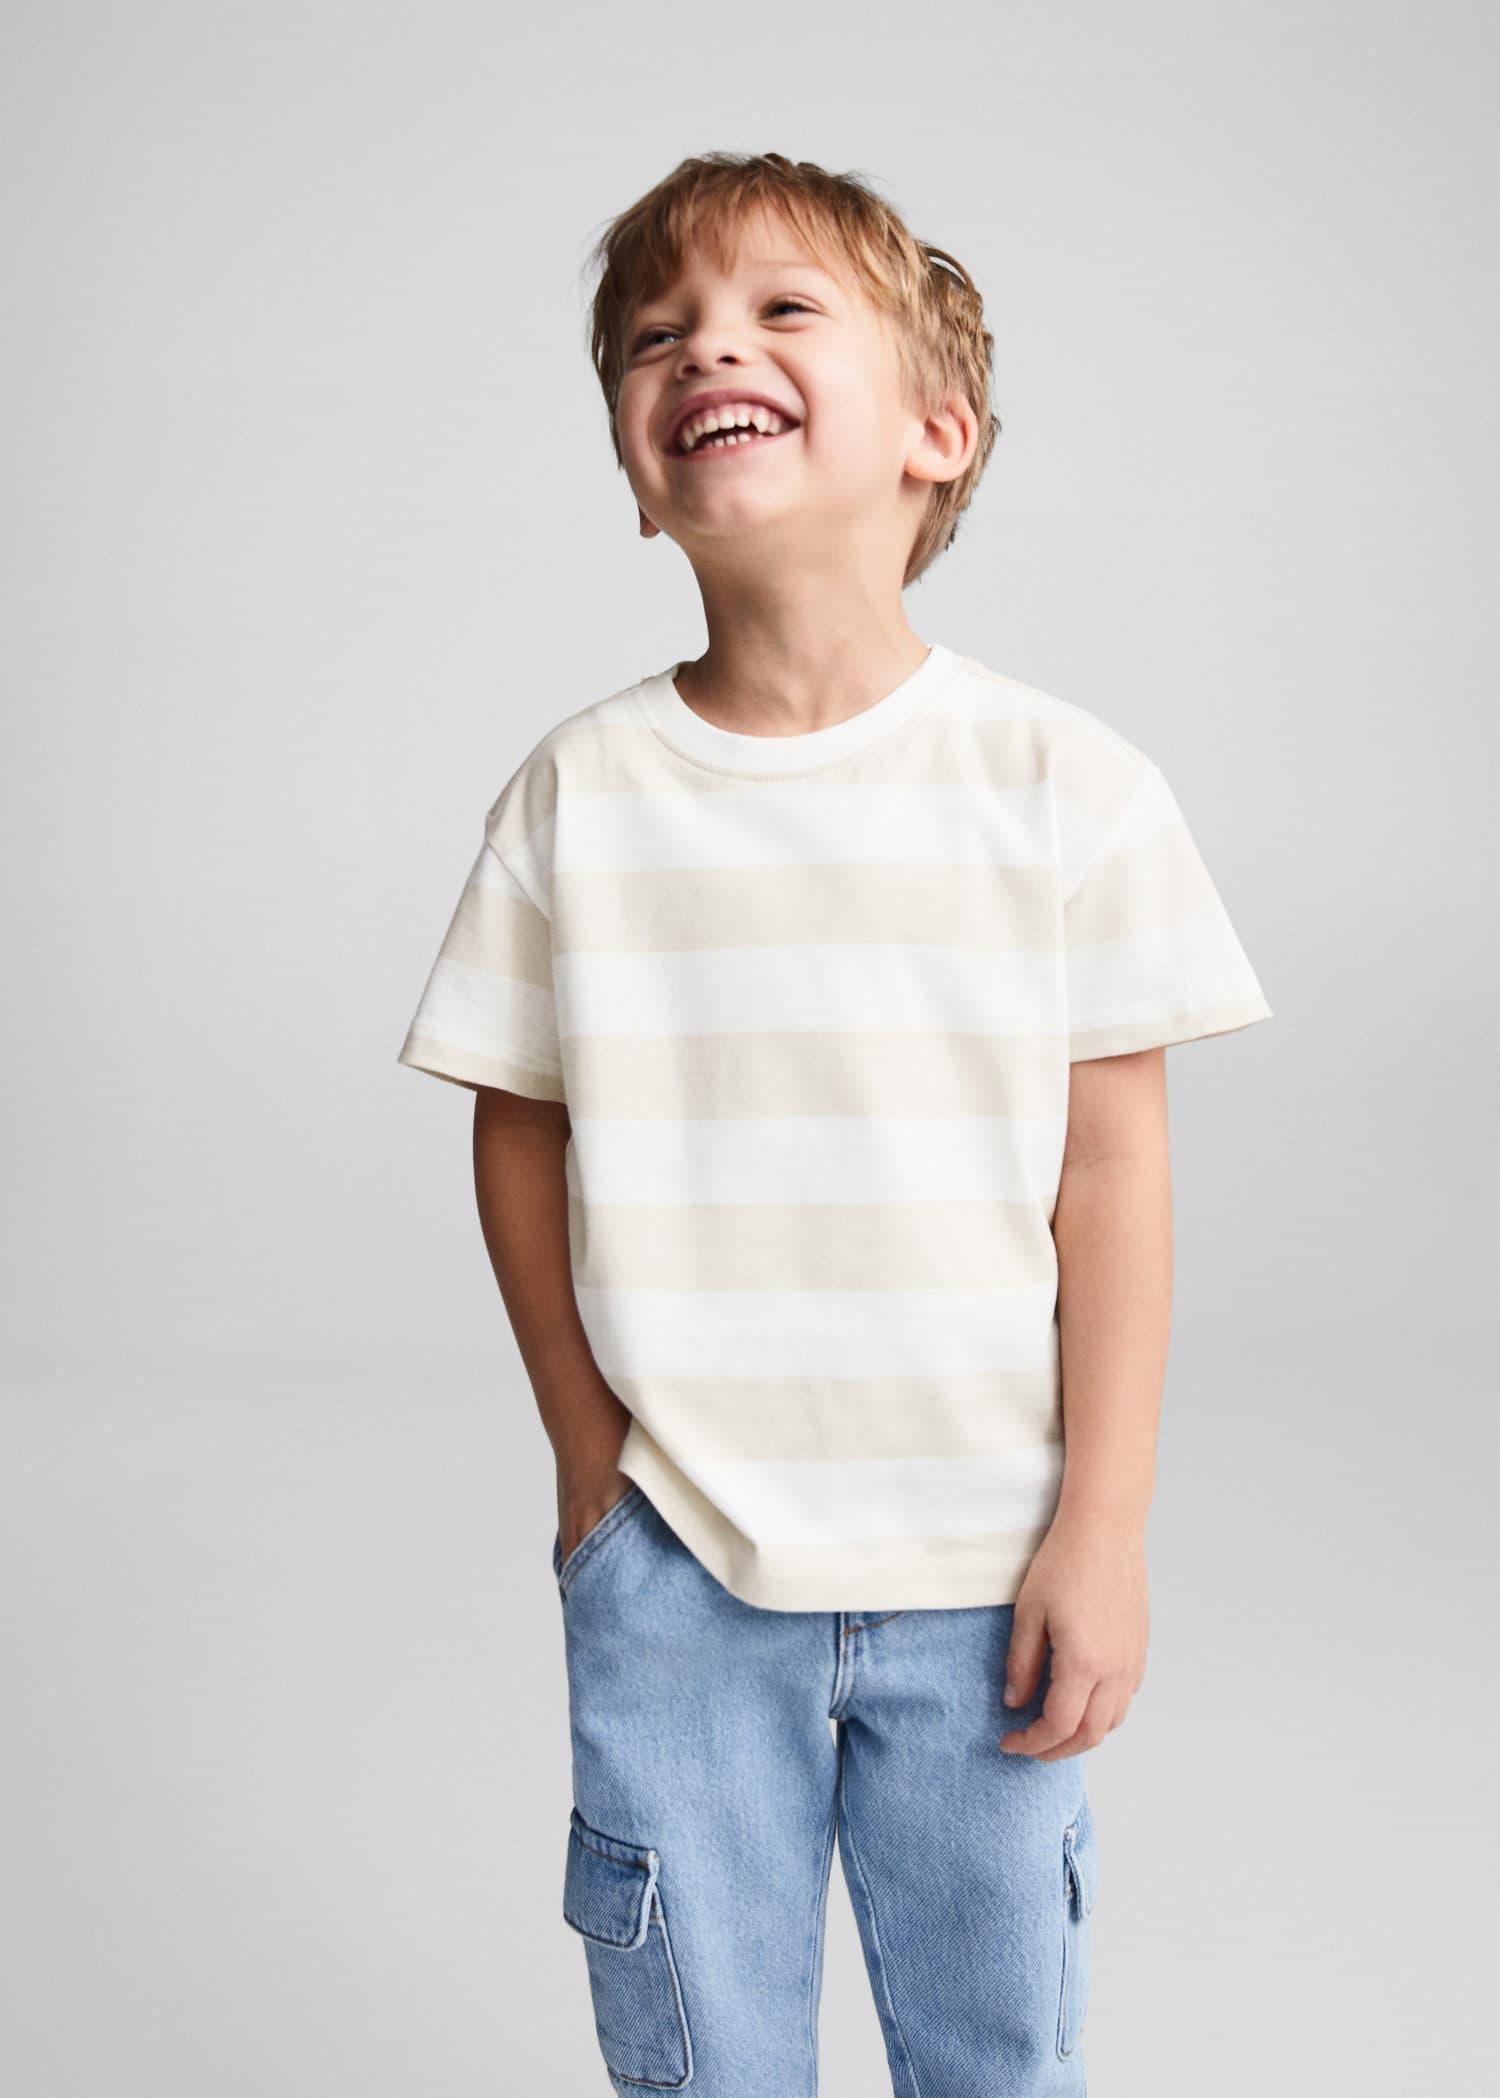 Mango - Brown Striped Printed T-Shirt , Kids Boys